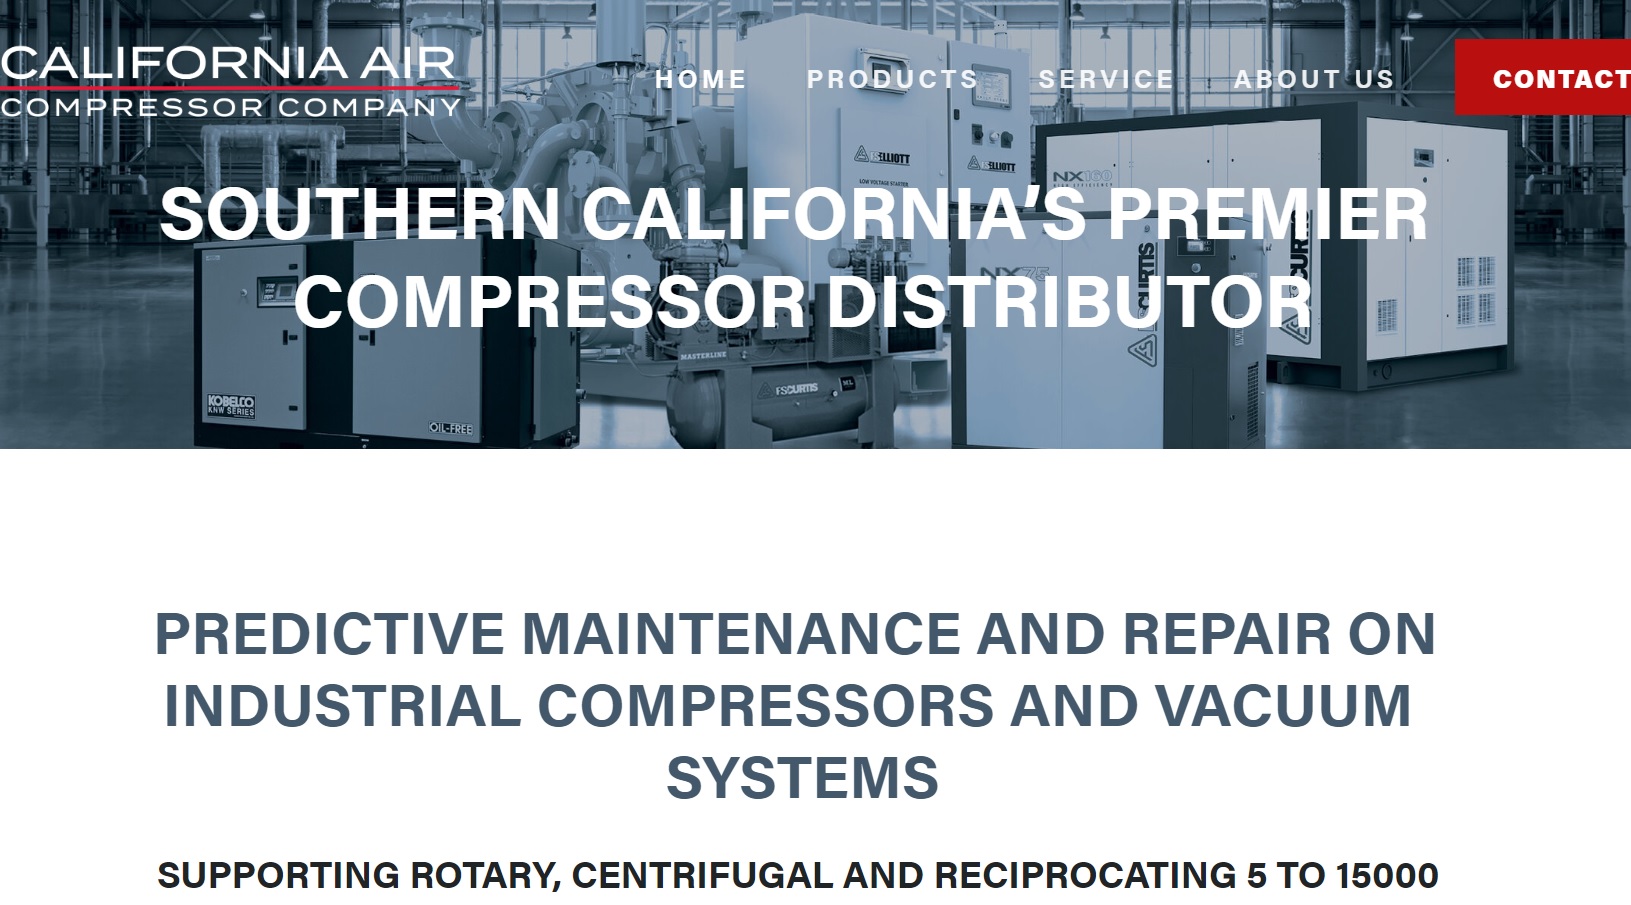 California Air Compressor Company